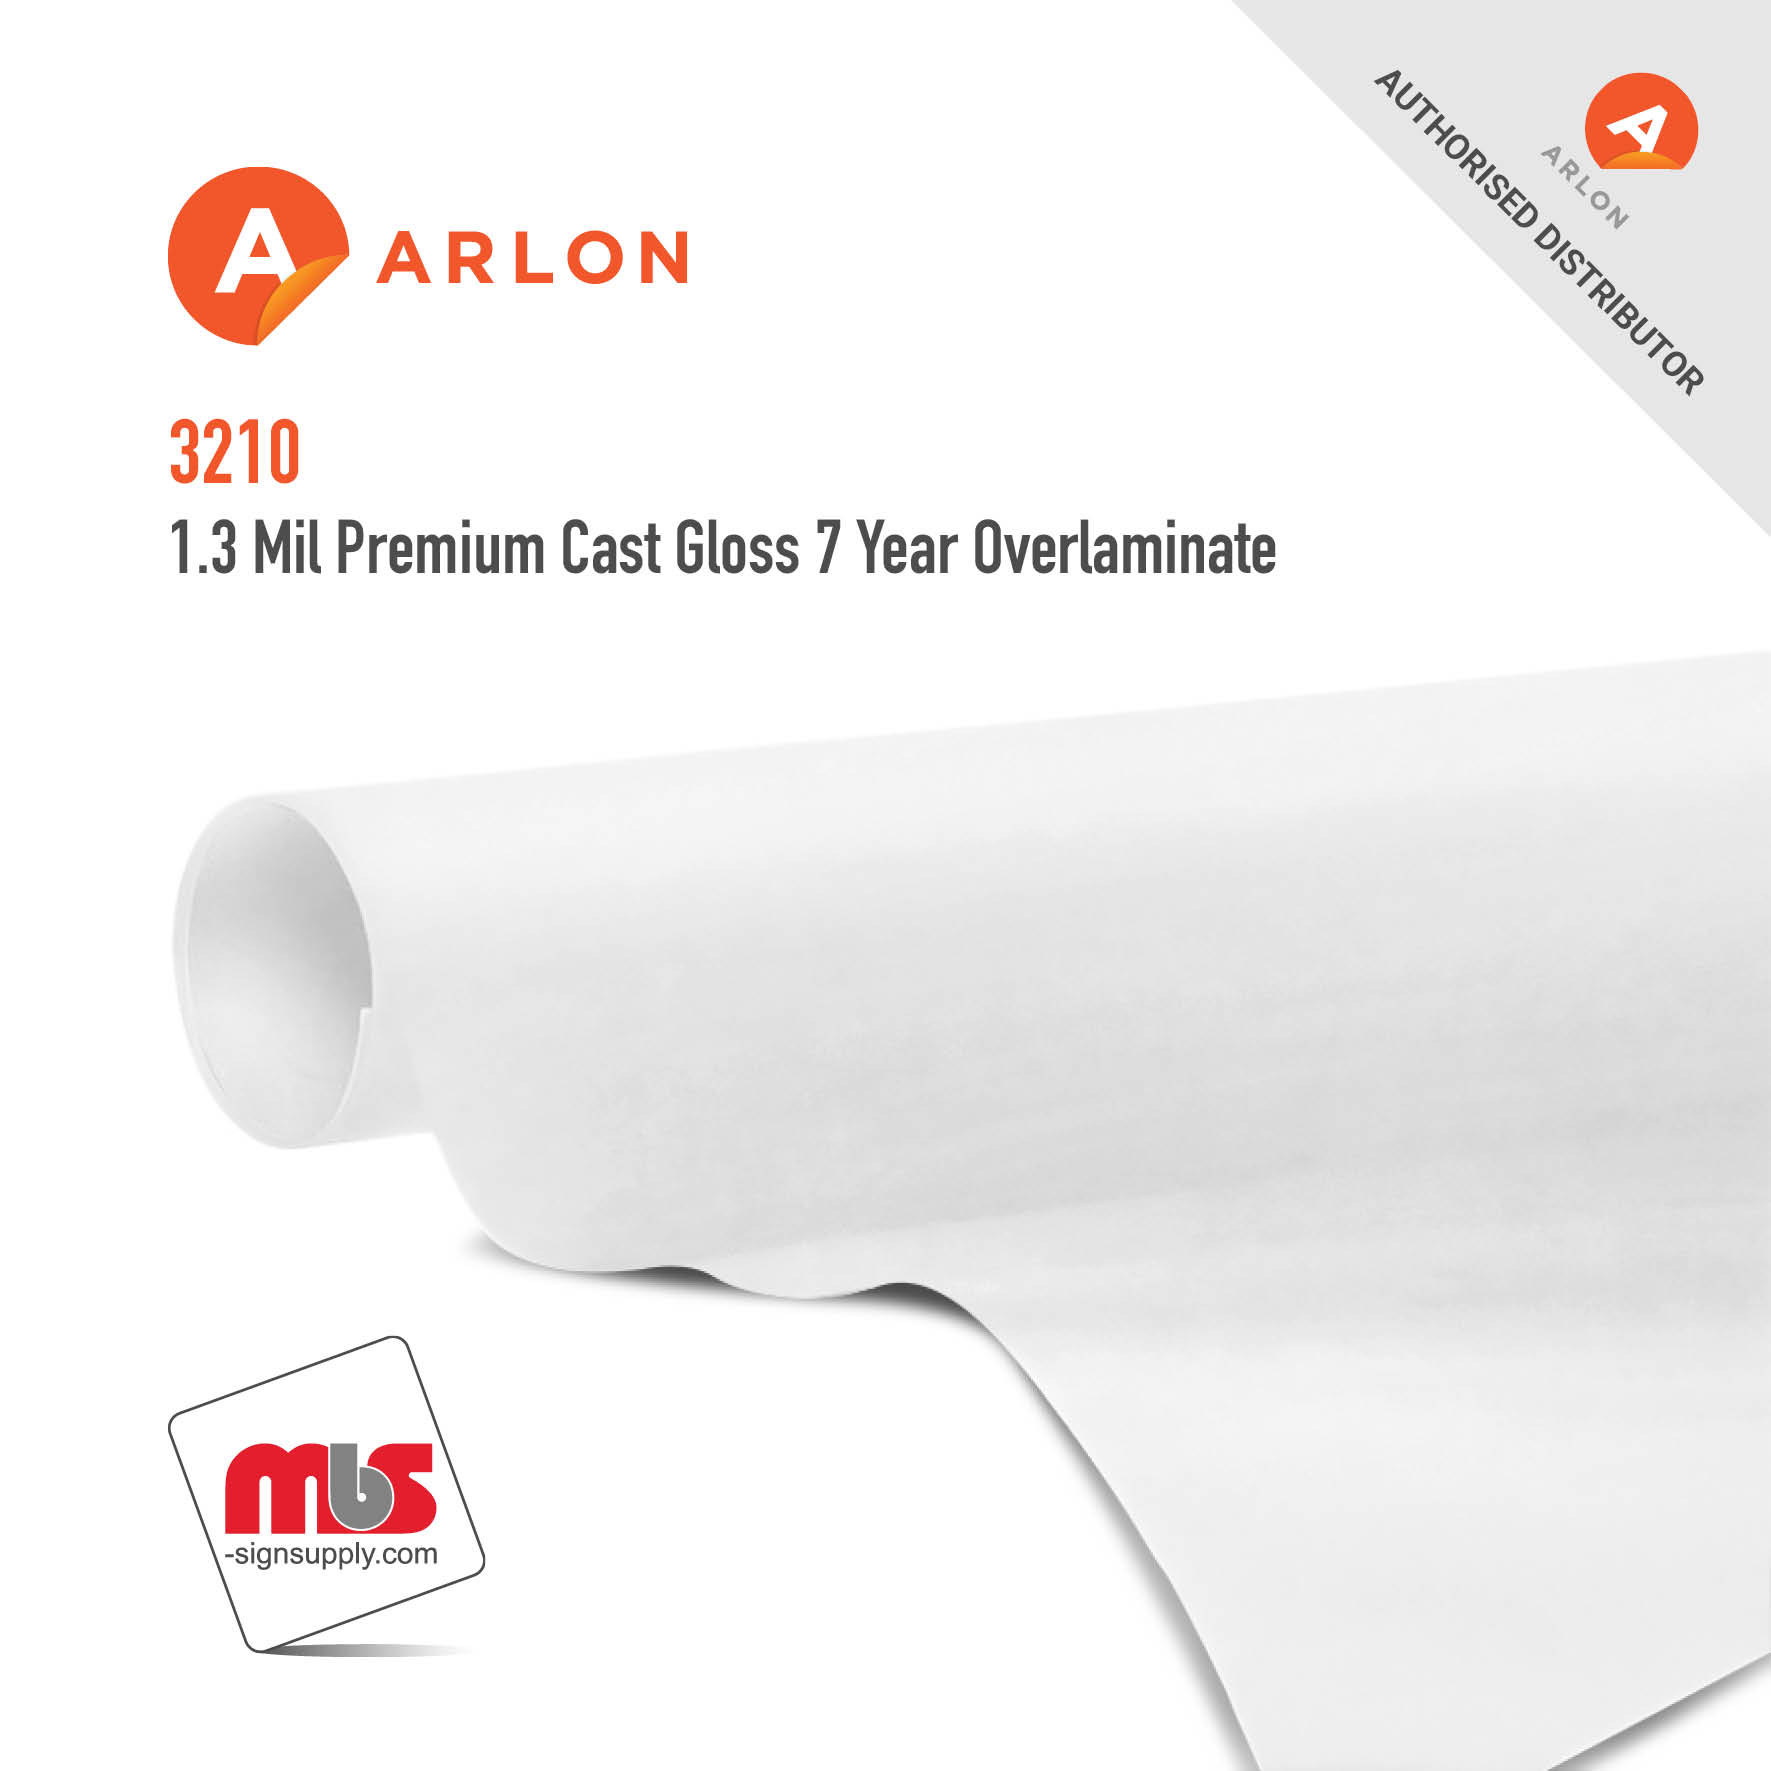 48'' x 50 Yard Roll - Arlon 3710 1.3 Mil Premium Cast Gloss 7 Year Overlaminate